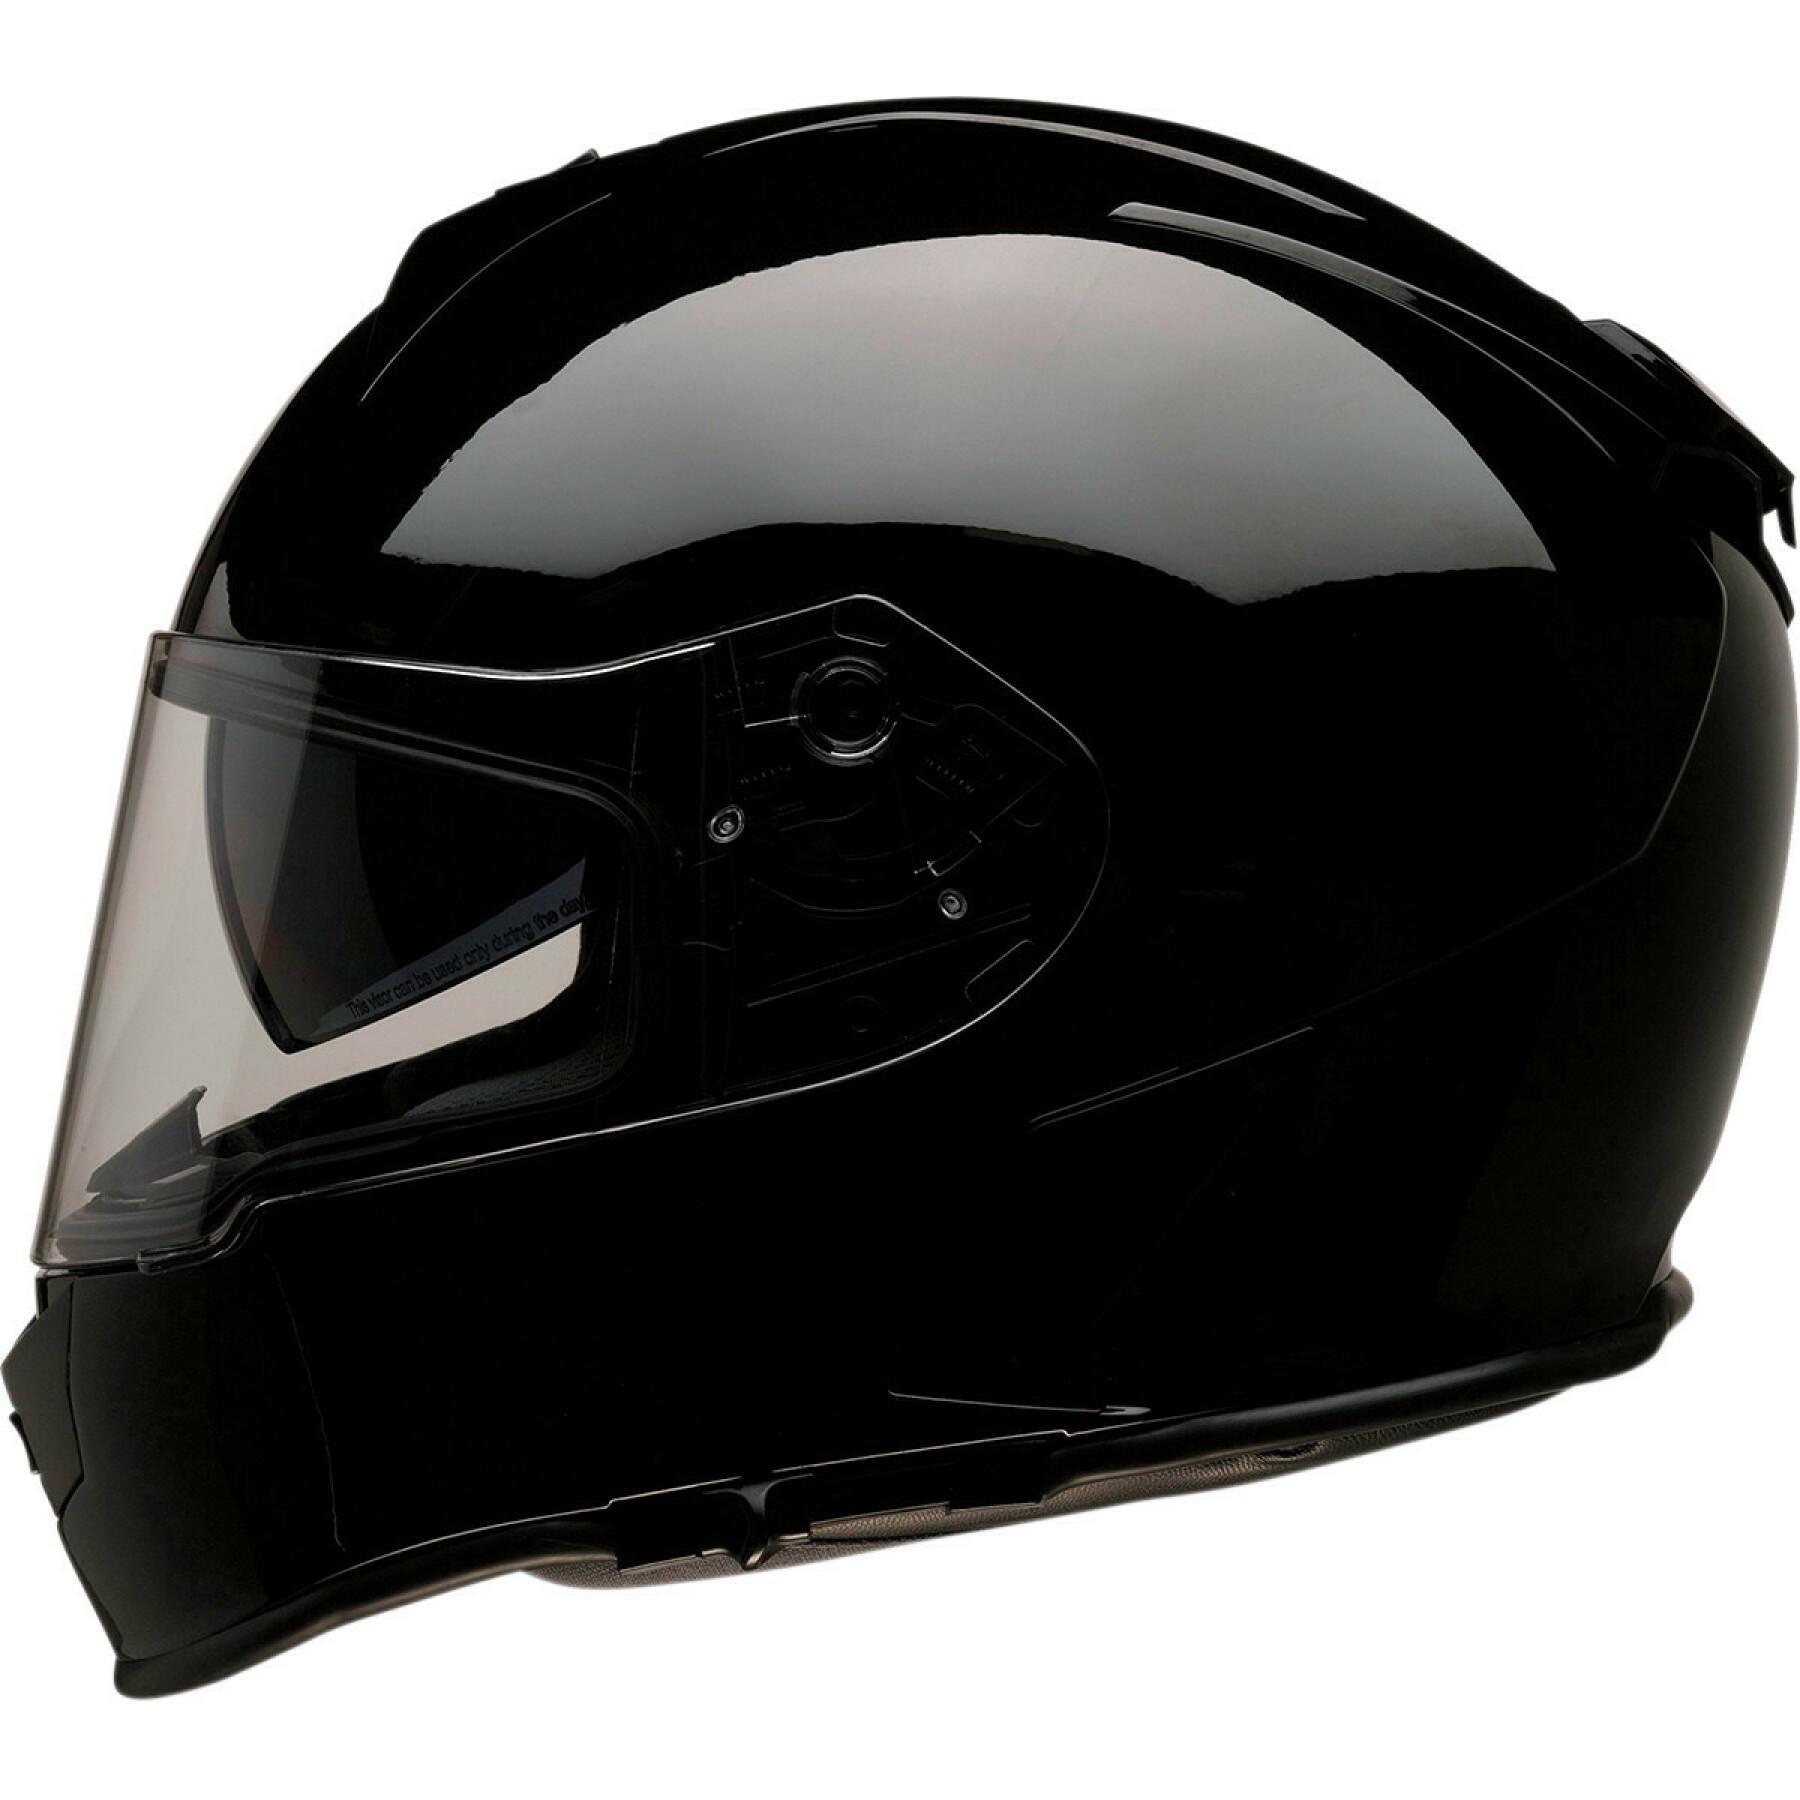 Full face motorcycle helmet Z1R warrant black